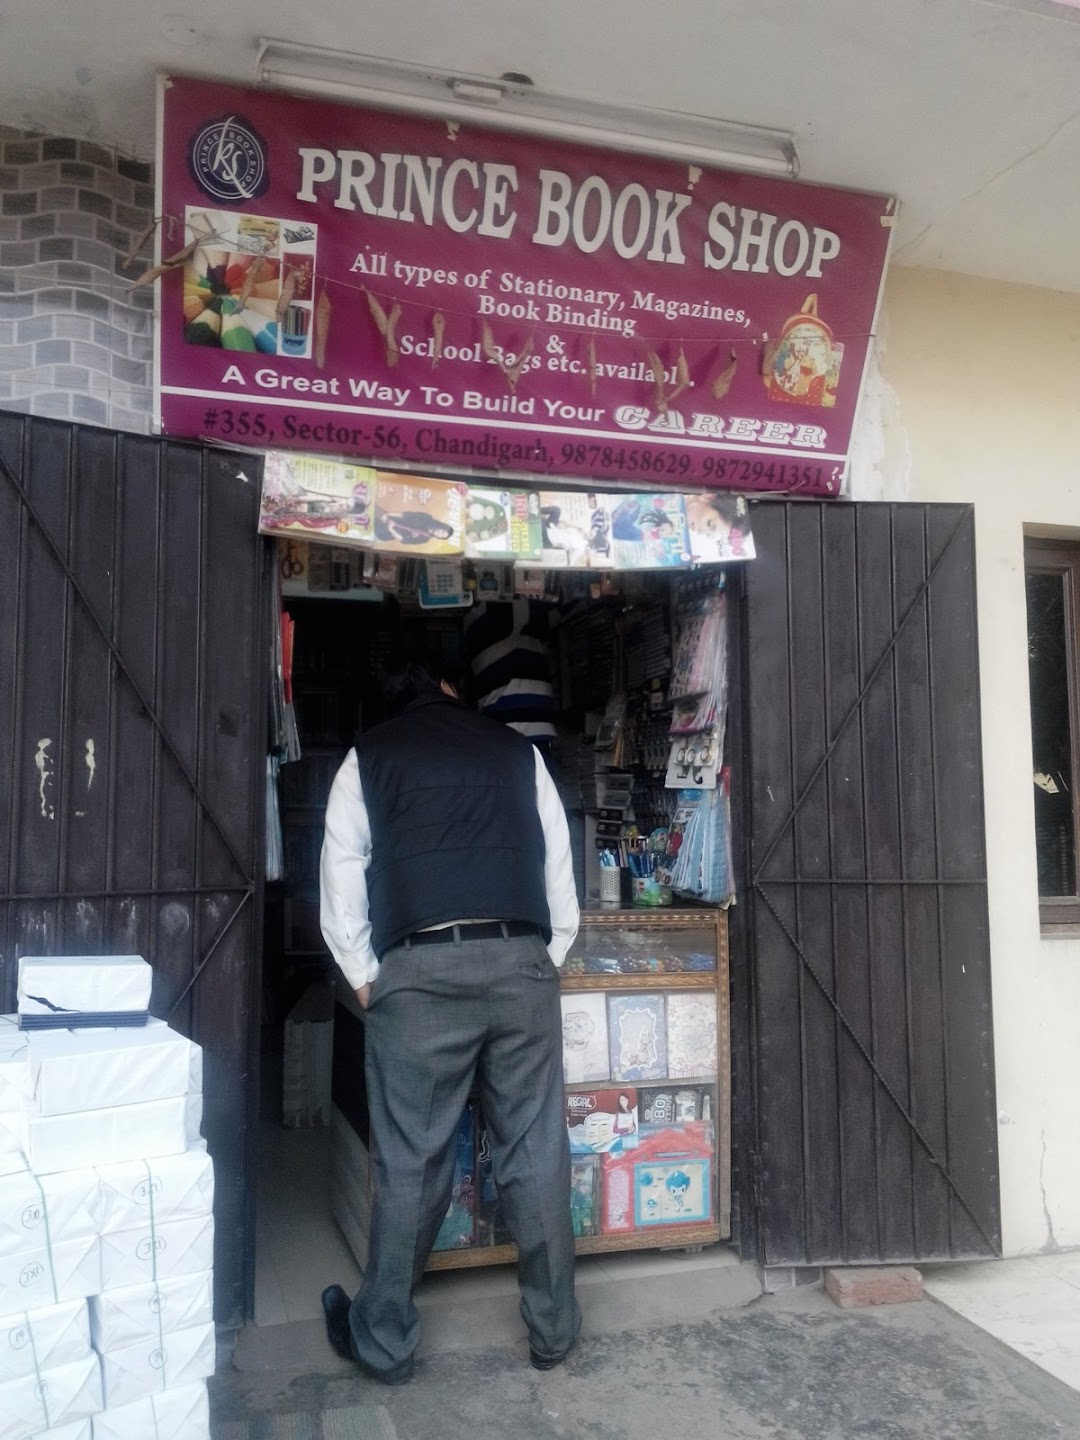 Prince Book Shop